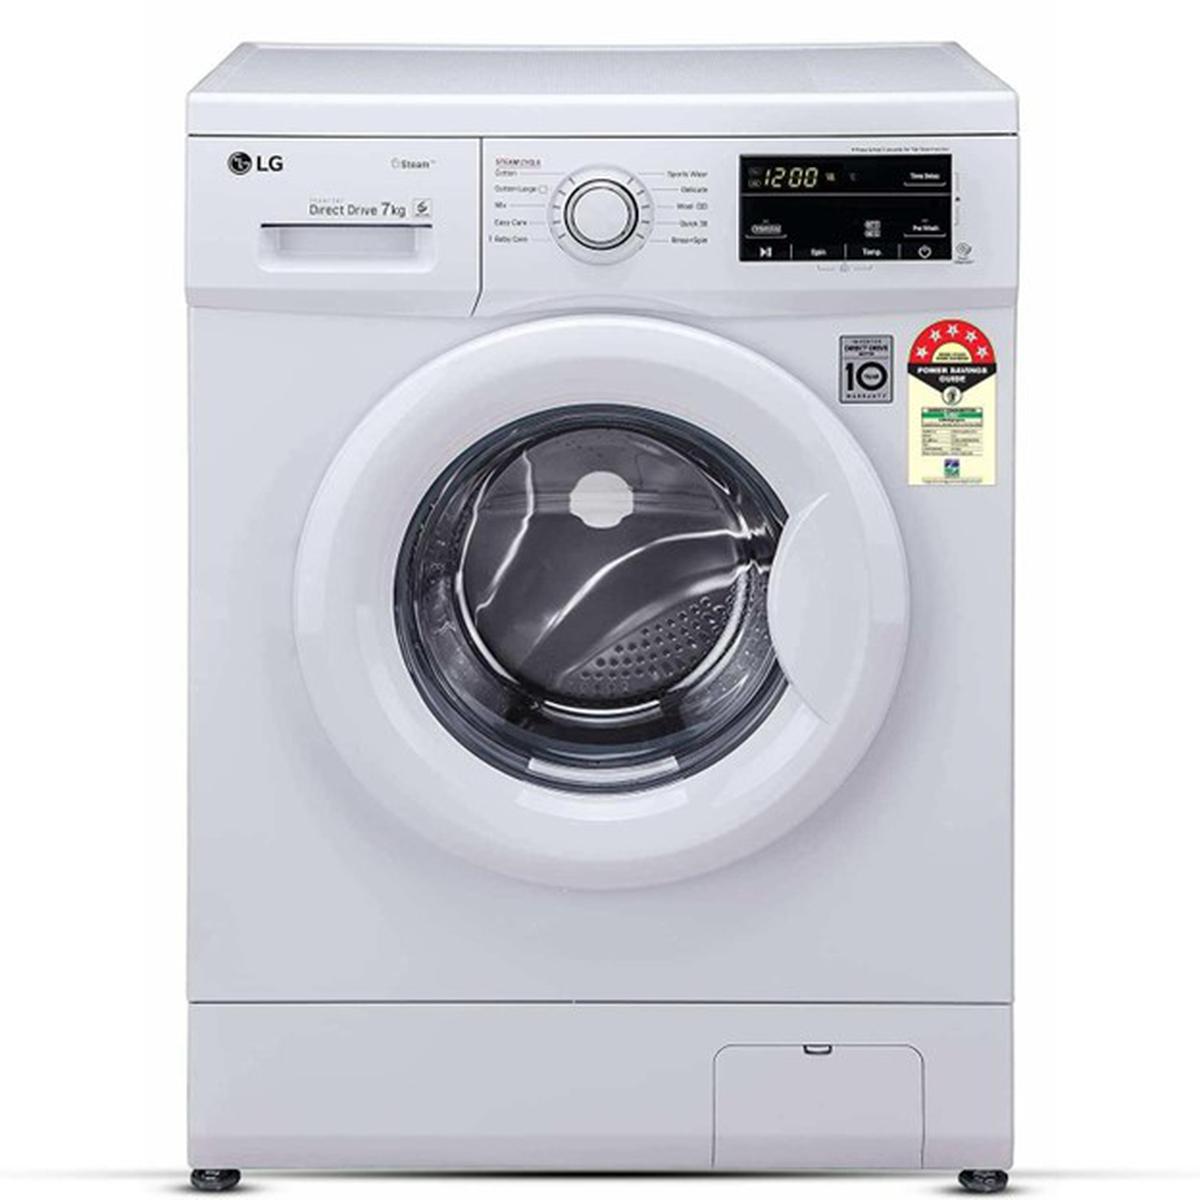 10 Best Washing Machine Brands In India Buyer’s Guide The Hindu